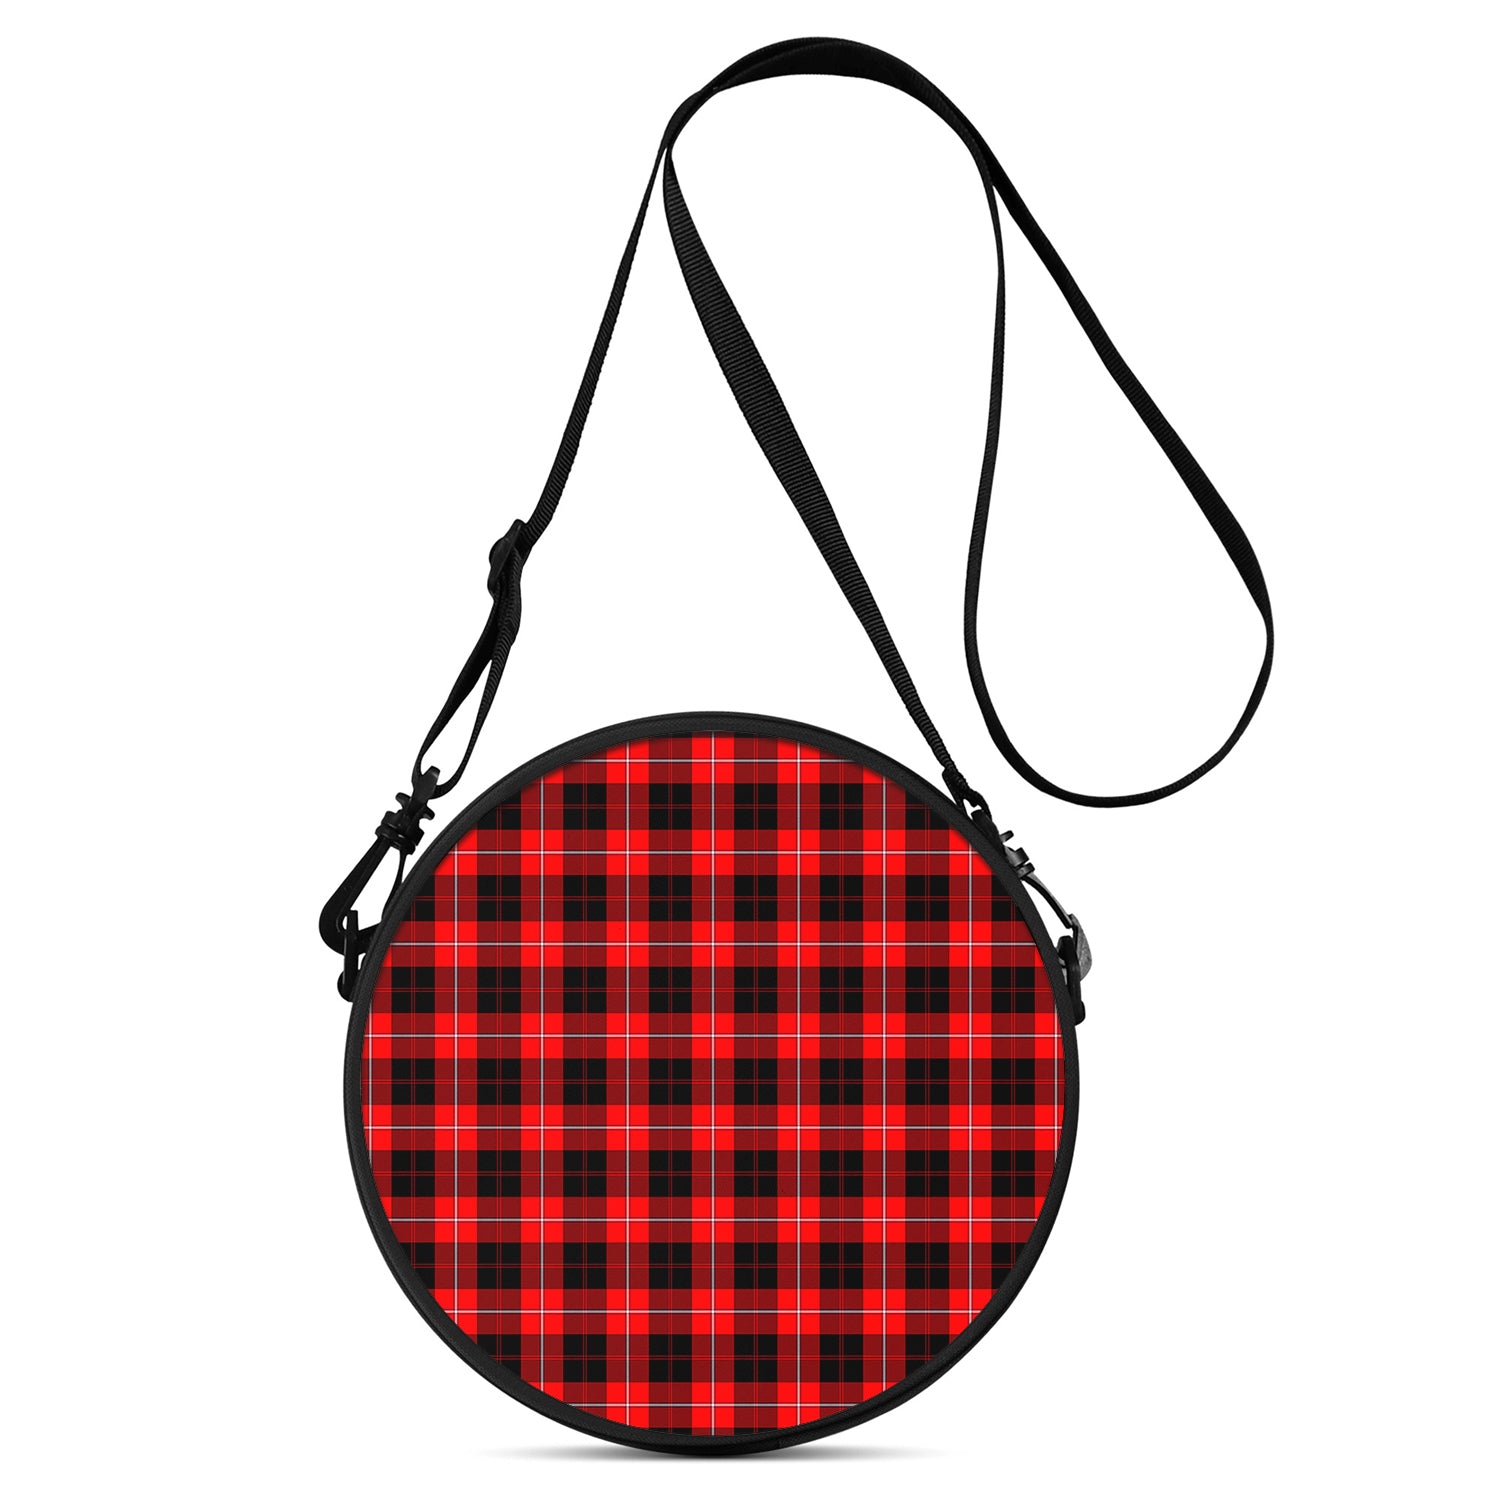 cunningham-modern-tartan-round-satchel-bags